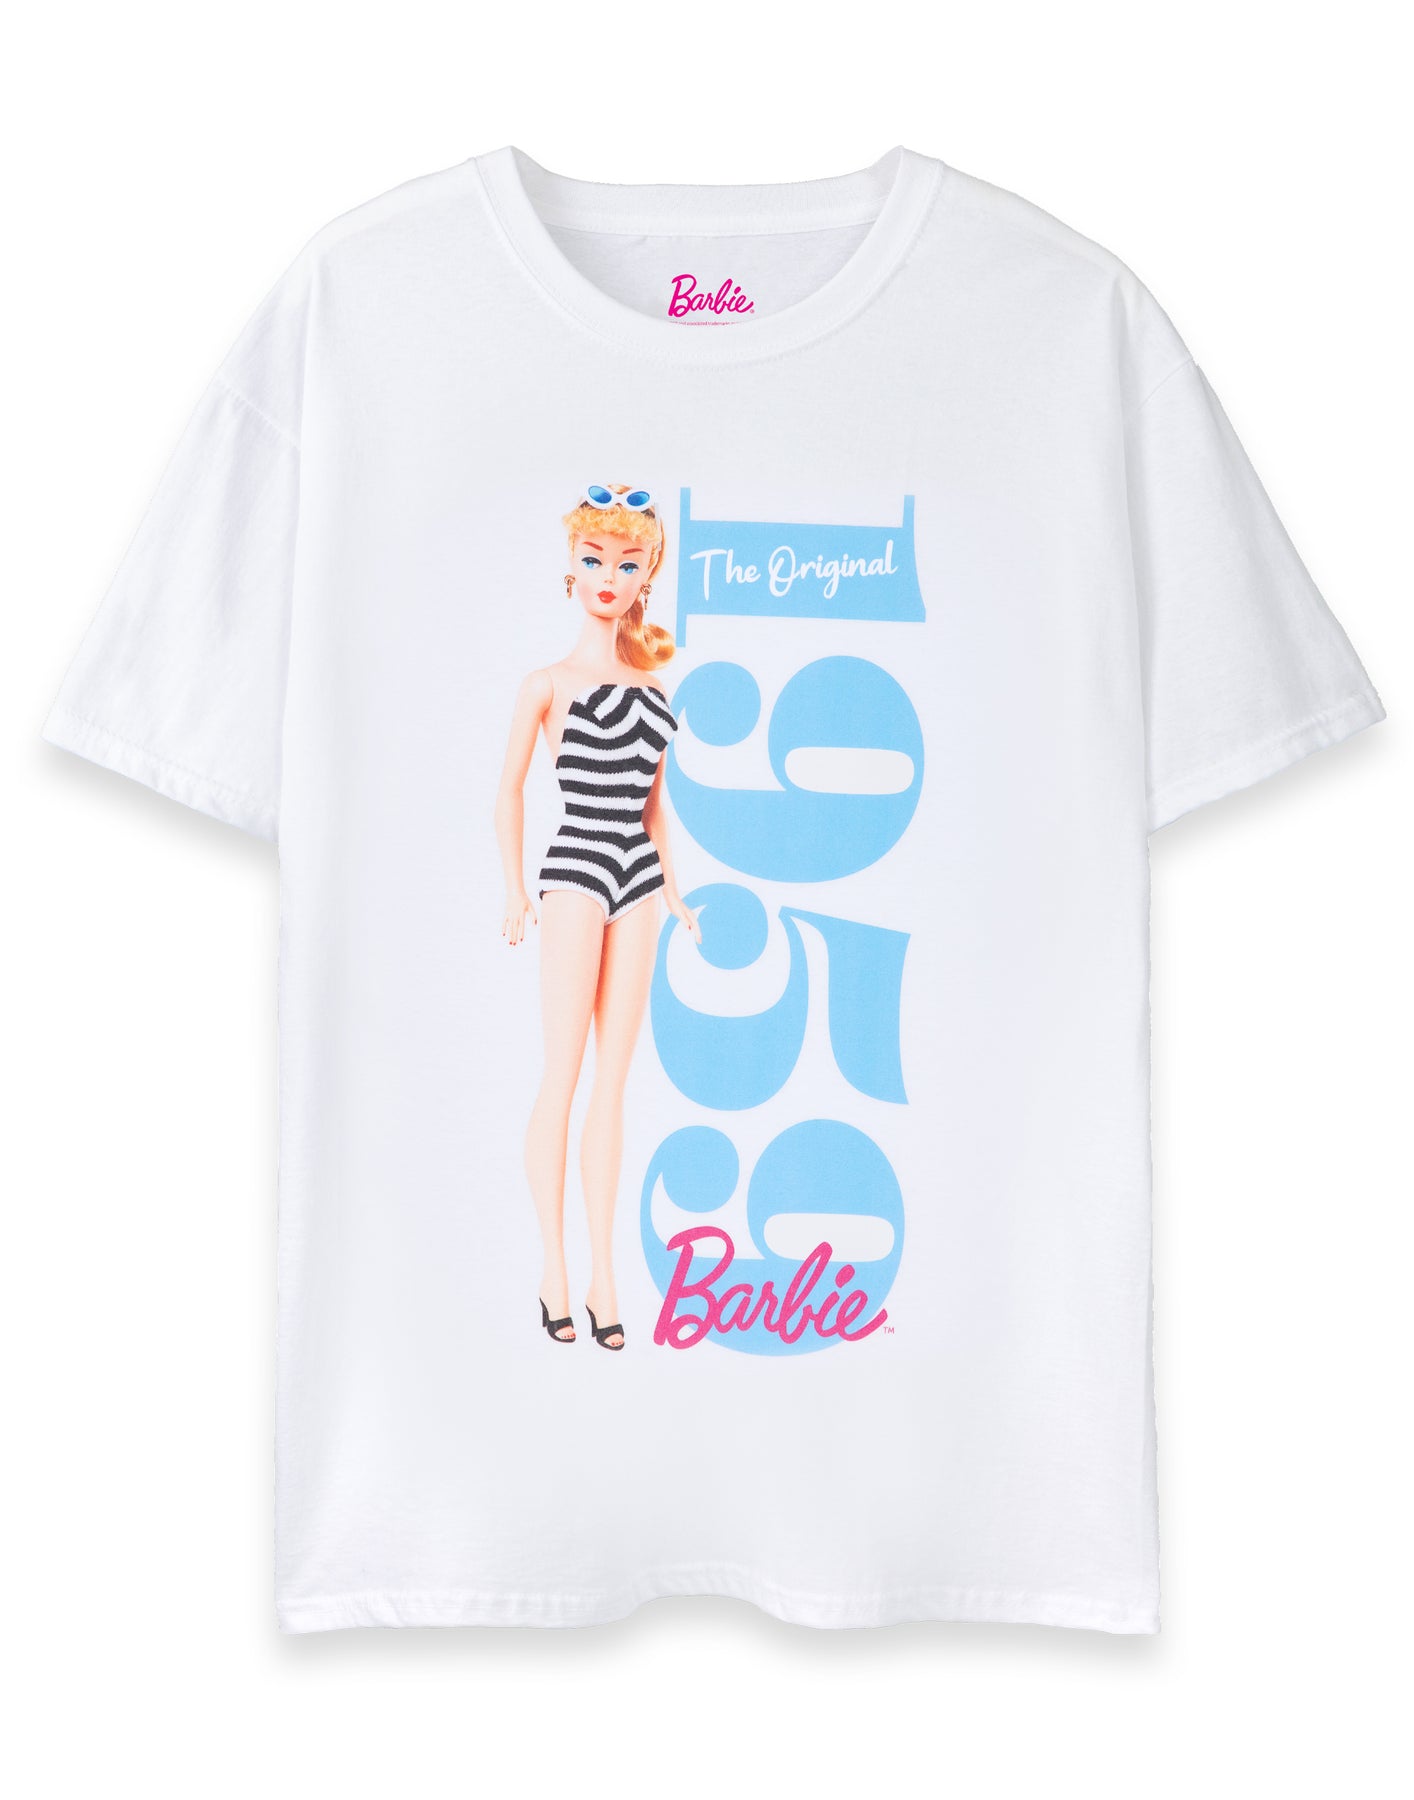 barbie the original womens white short sleeved t shirt 9830 zyqbj